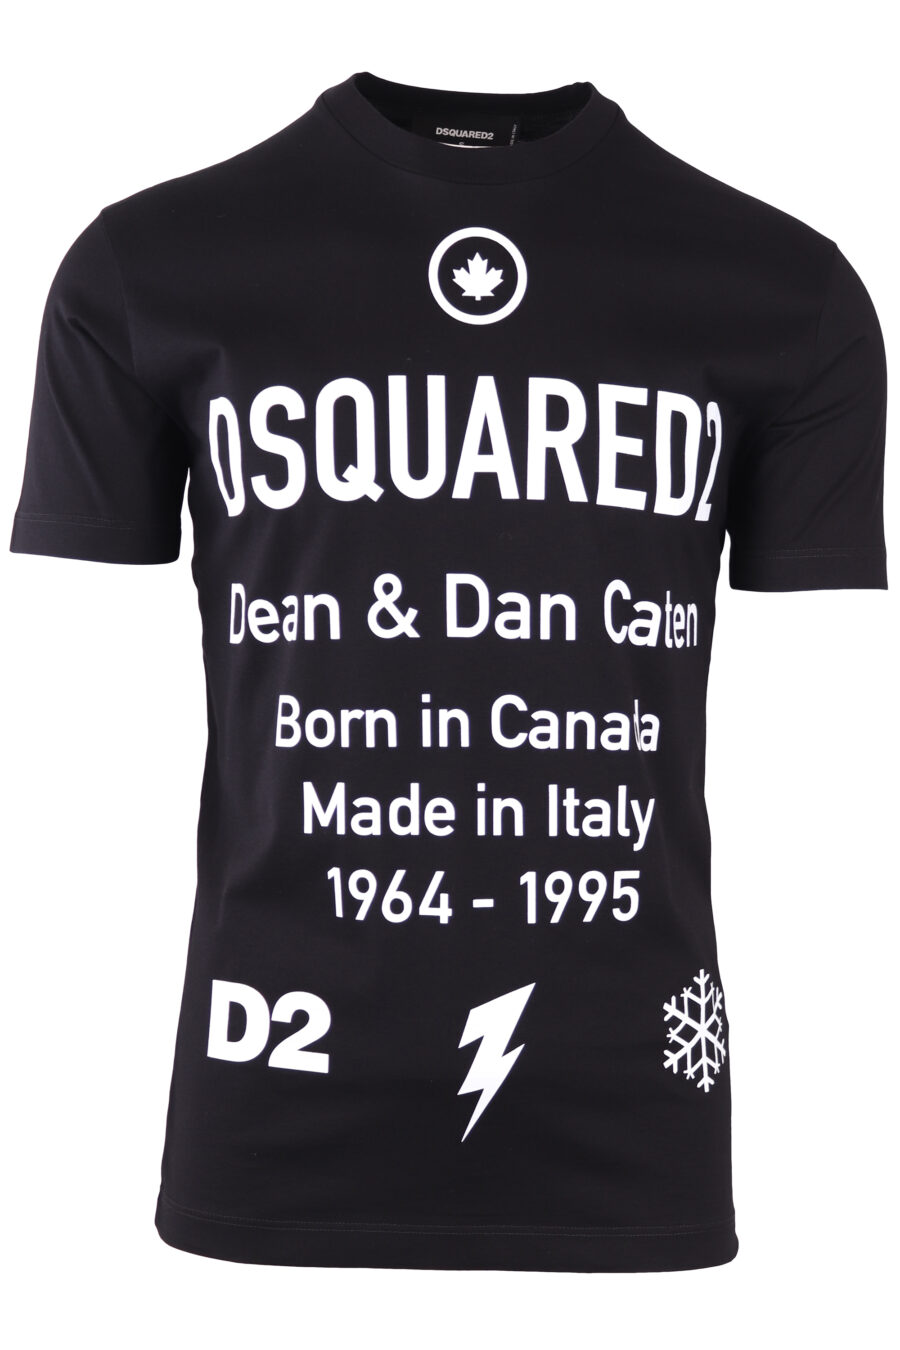 T-shirt black with maxilogo text "dean and dan caten" - IMG 7722